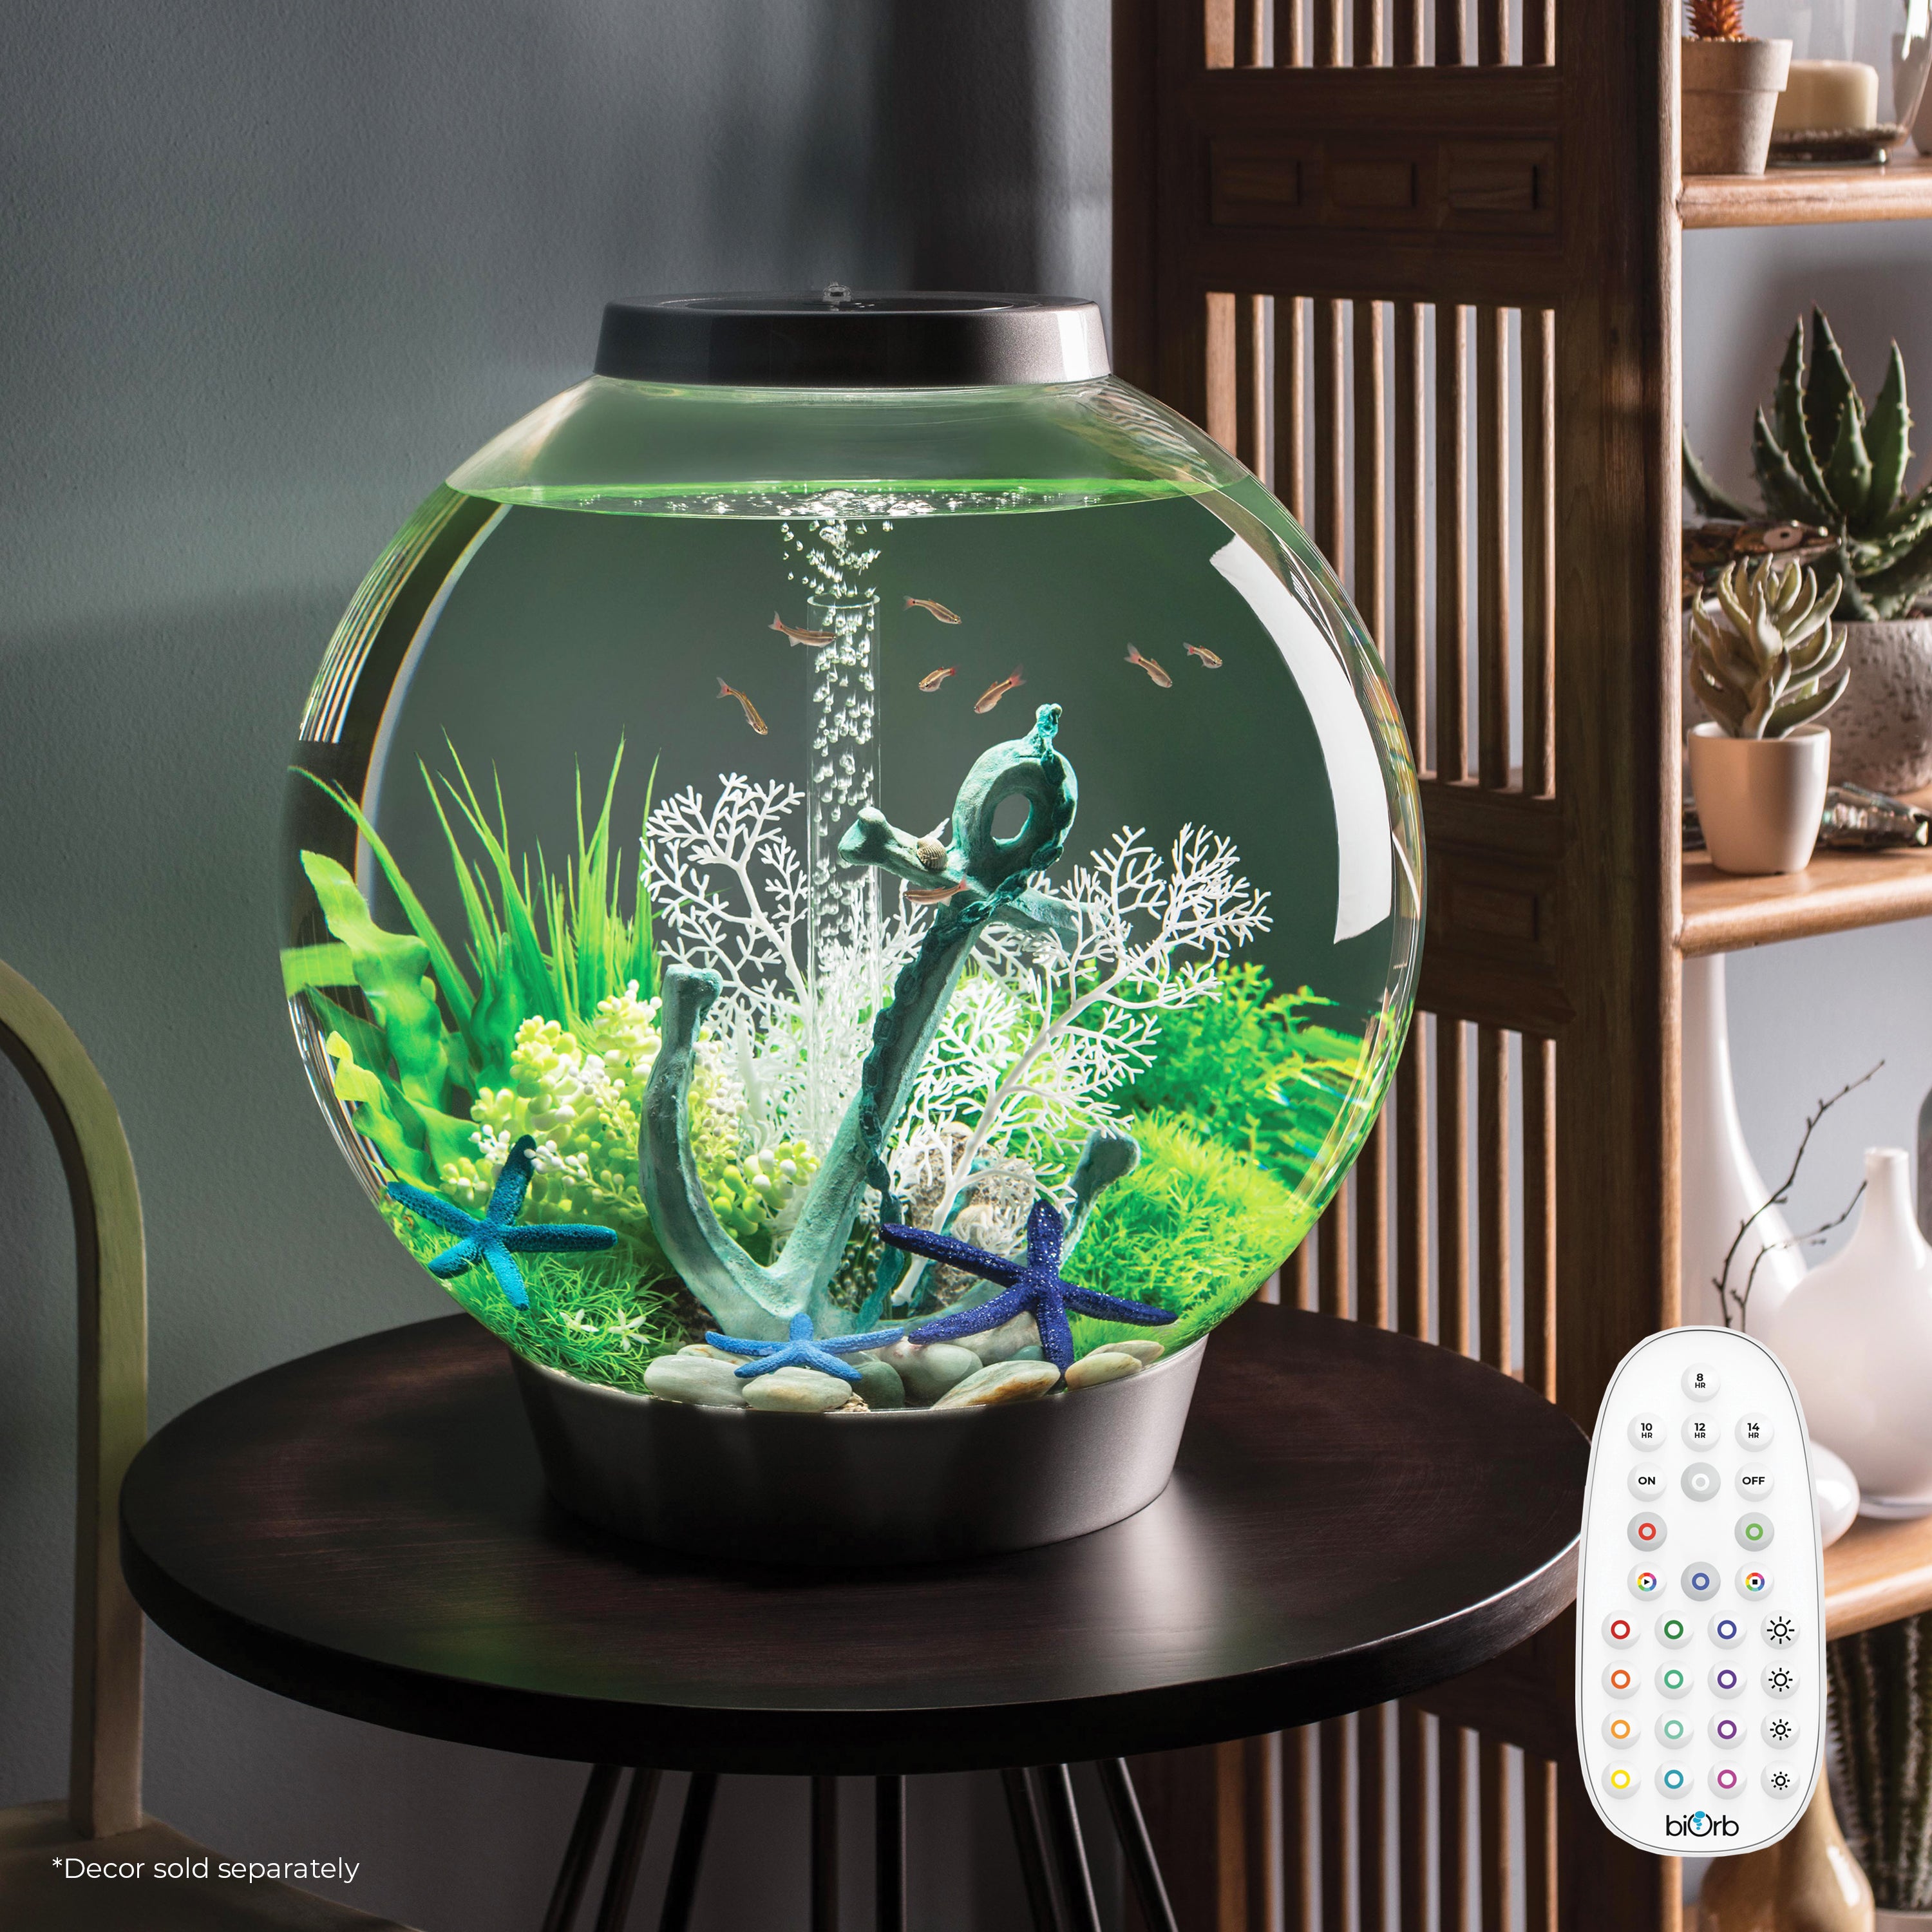 Get inspiration for your aquarium CLASSIC 60 Aquarium with MCR Light - 16 gallon available in silver